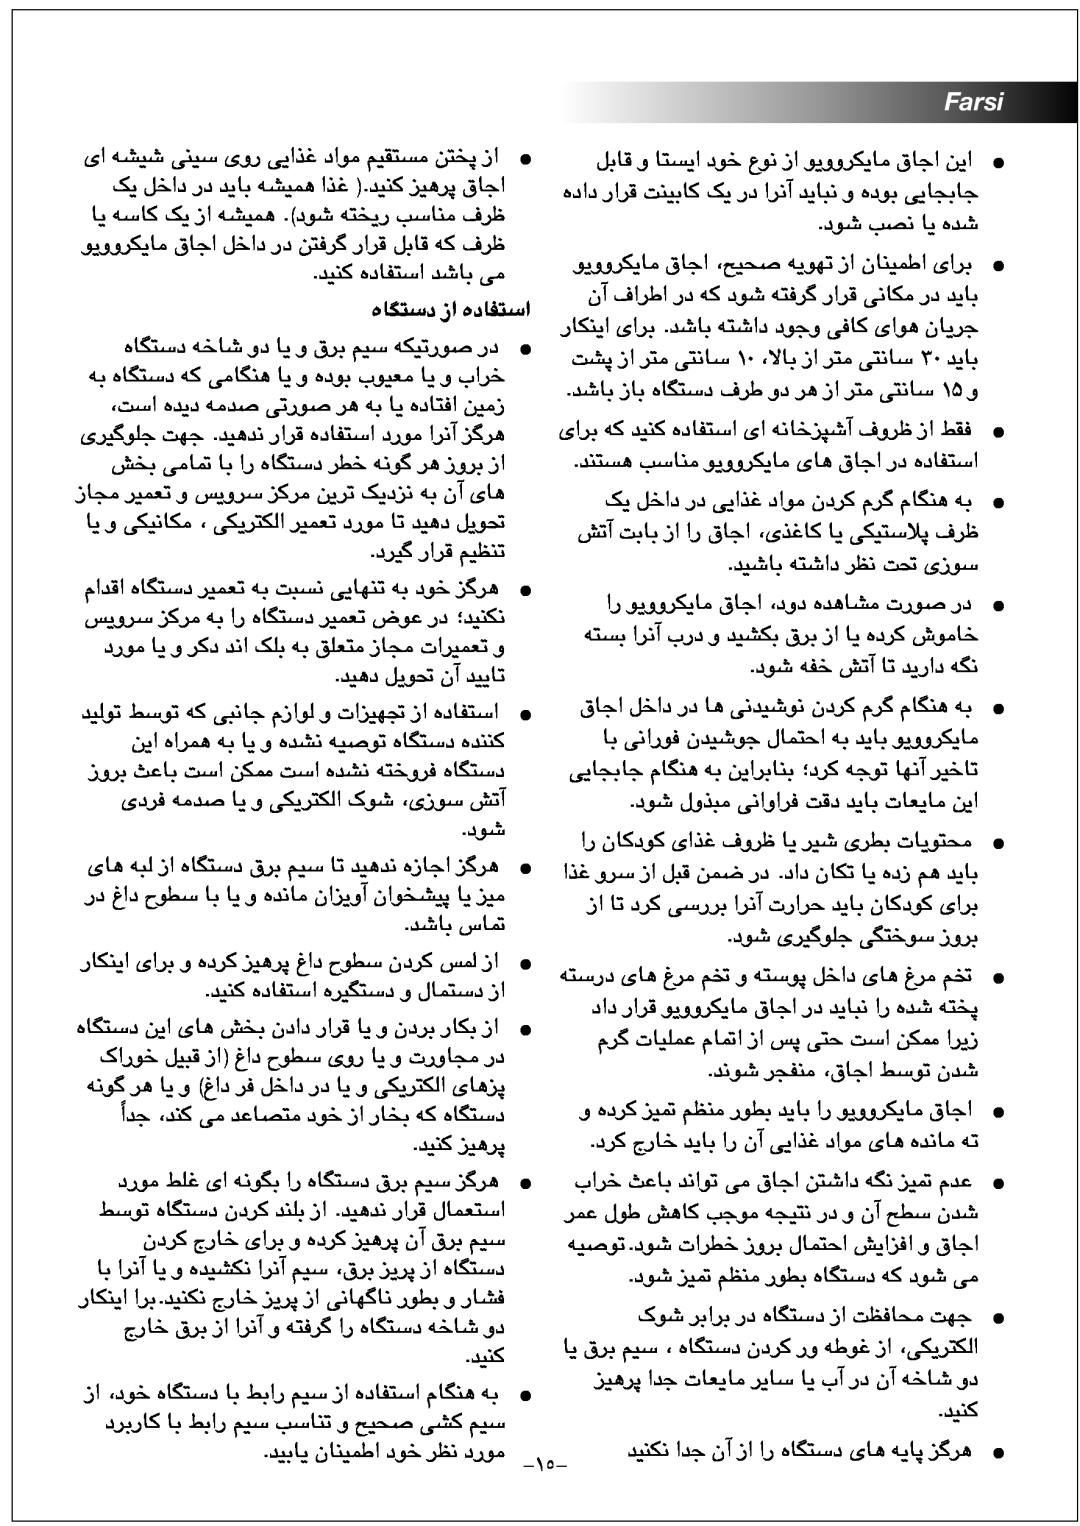 Black & Decker MZ2000P manual ﻩﺎﮕﺘﺳﺩ ﺯﺍ ﻩﺩﺎﻔﺘﺳﺍ, Farsi 